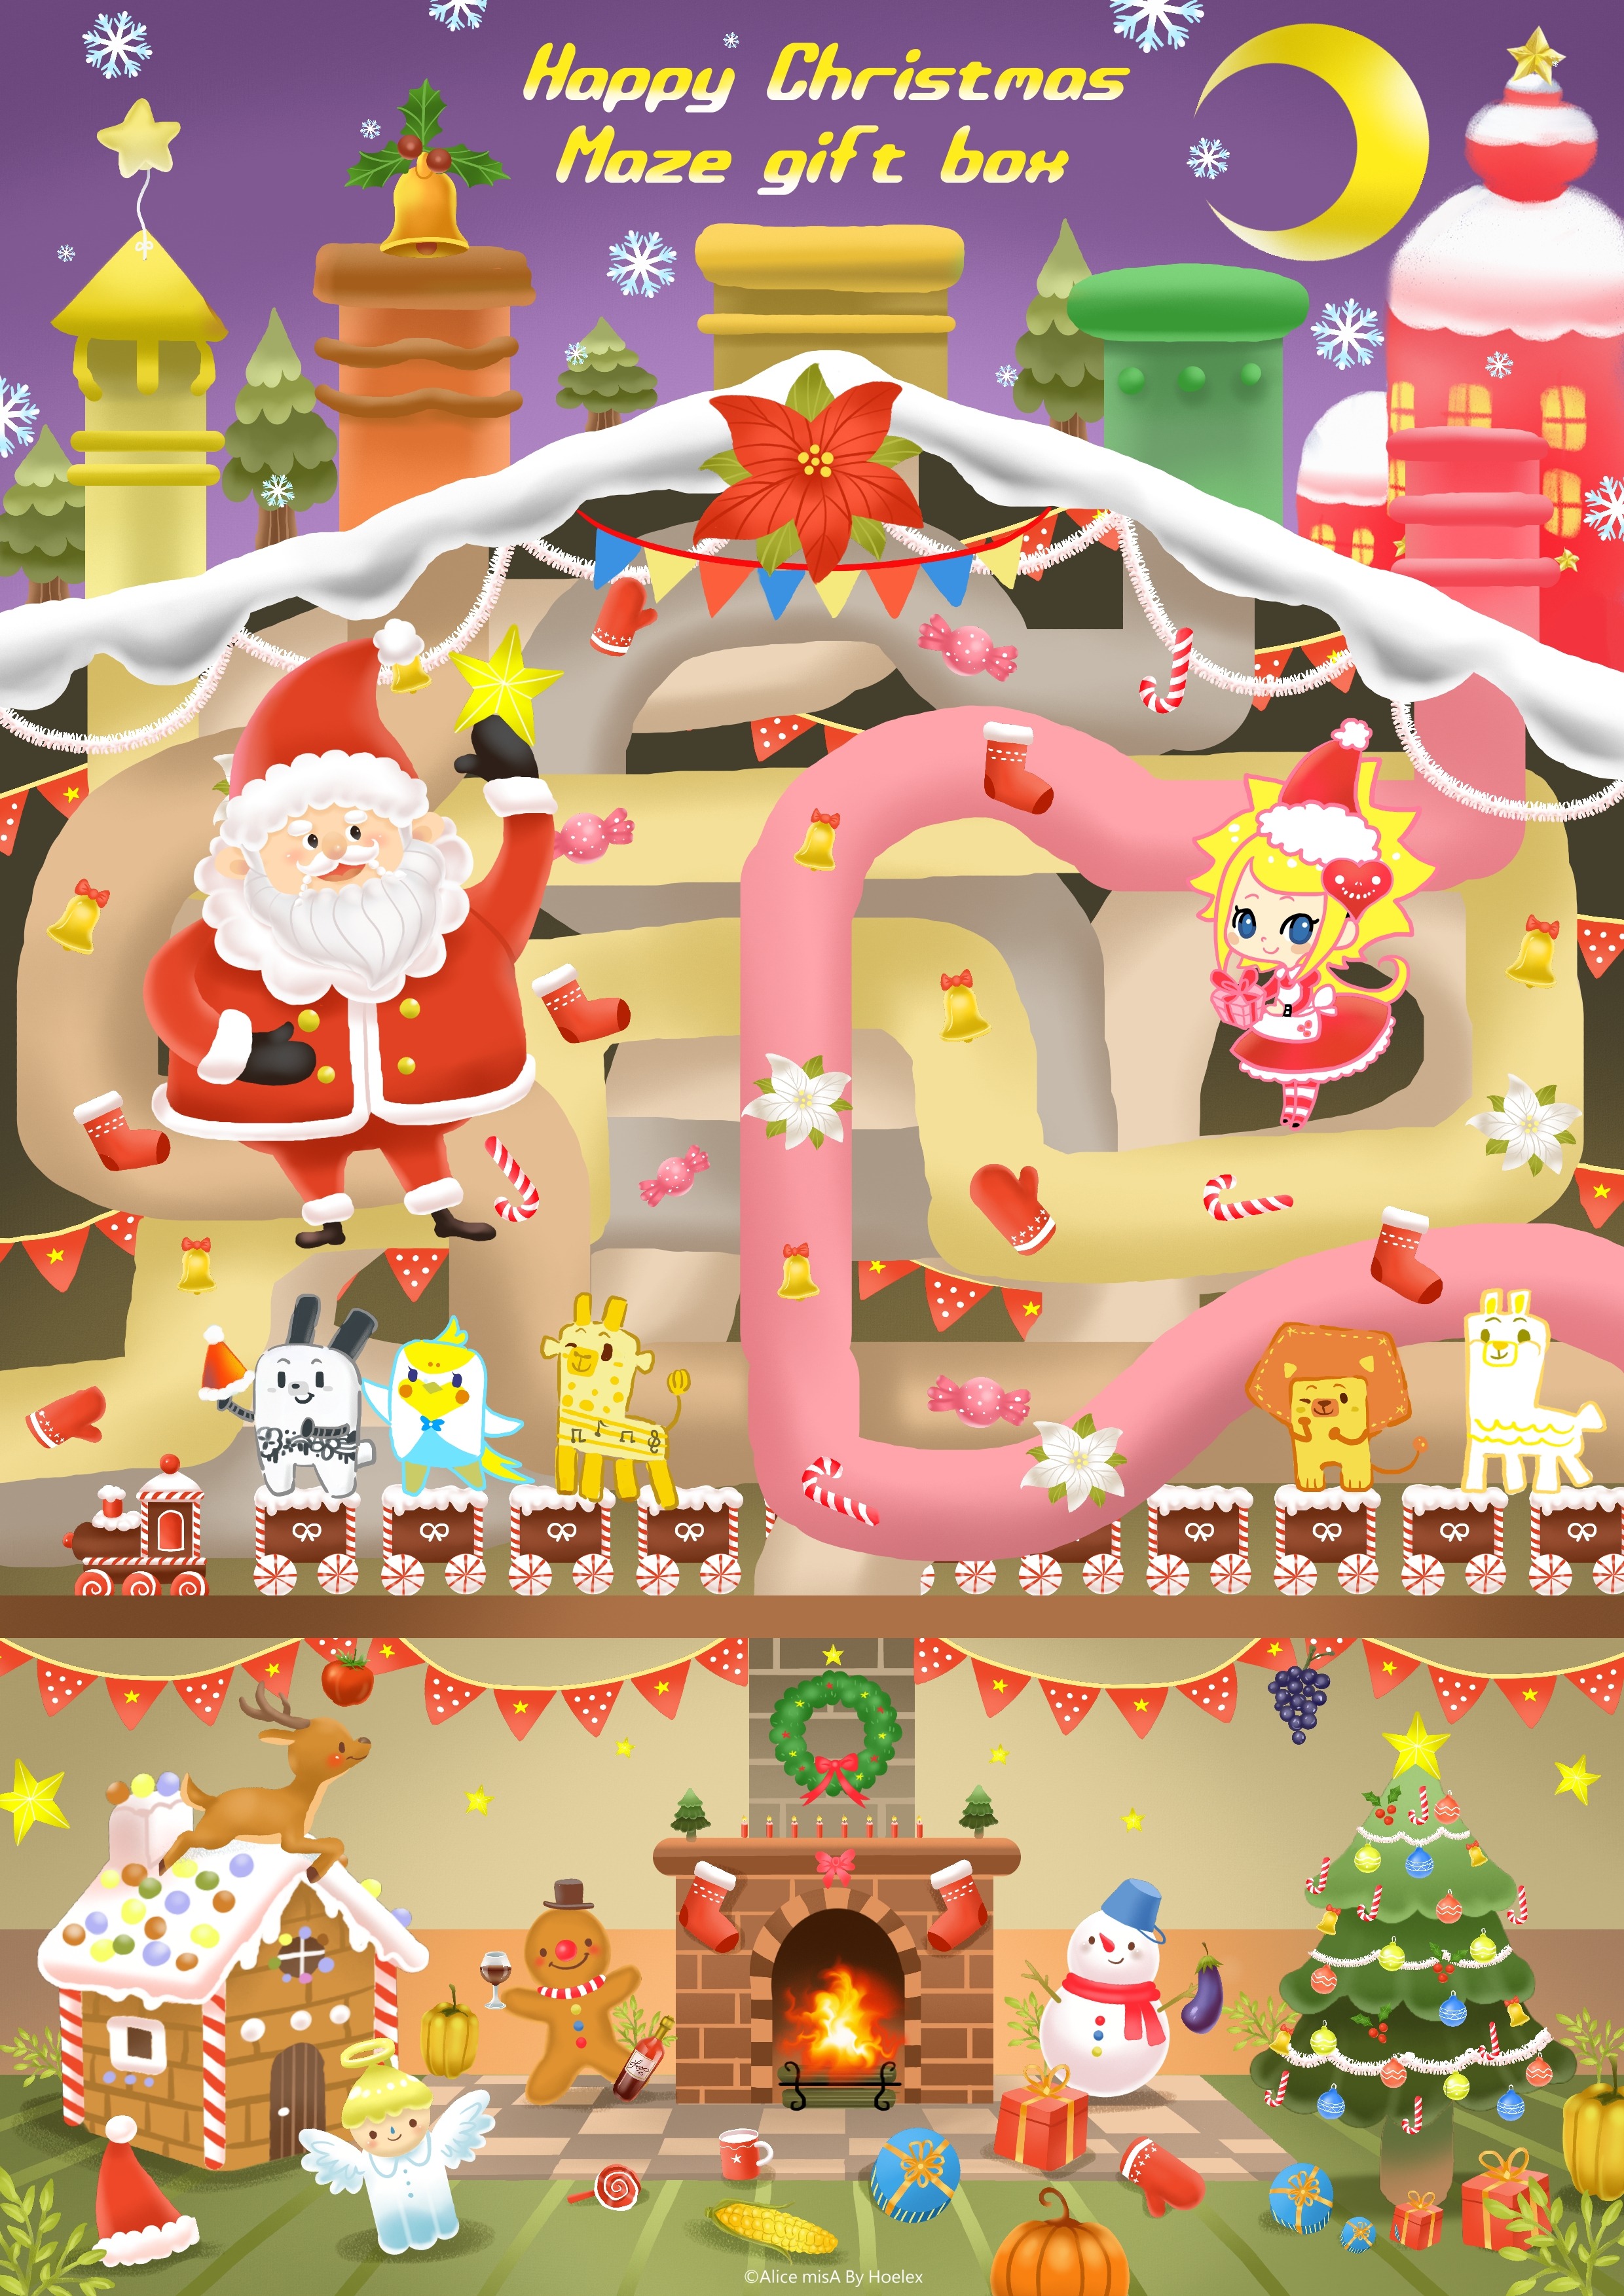 聖誕節迷宮禮物盒 Happy Christmas Maze gift box-Hoelex14.jpg